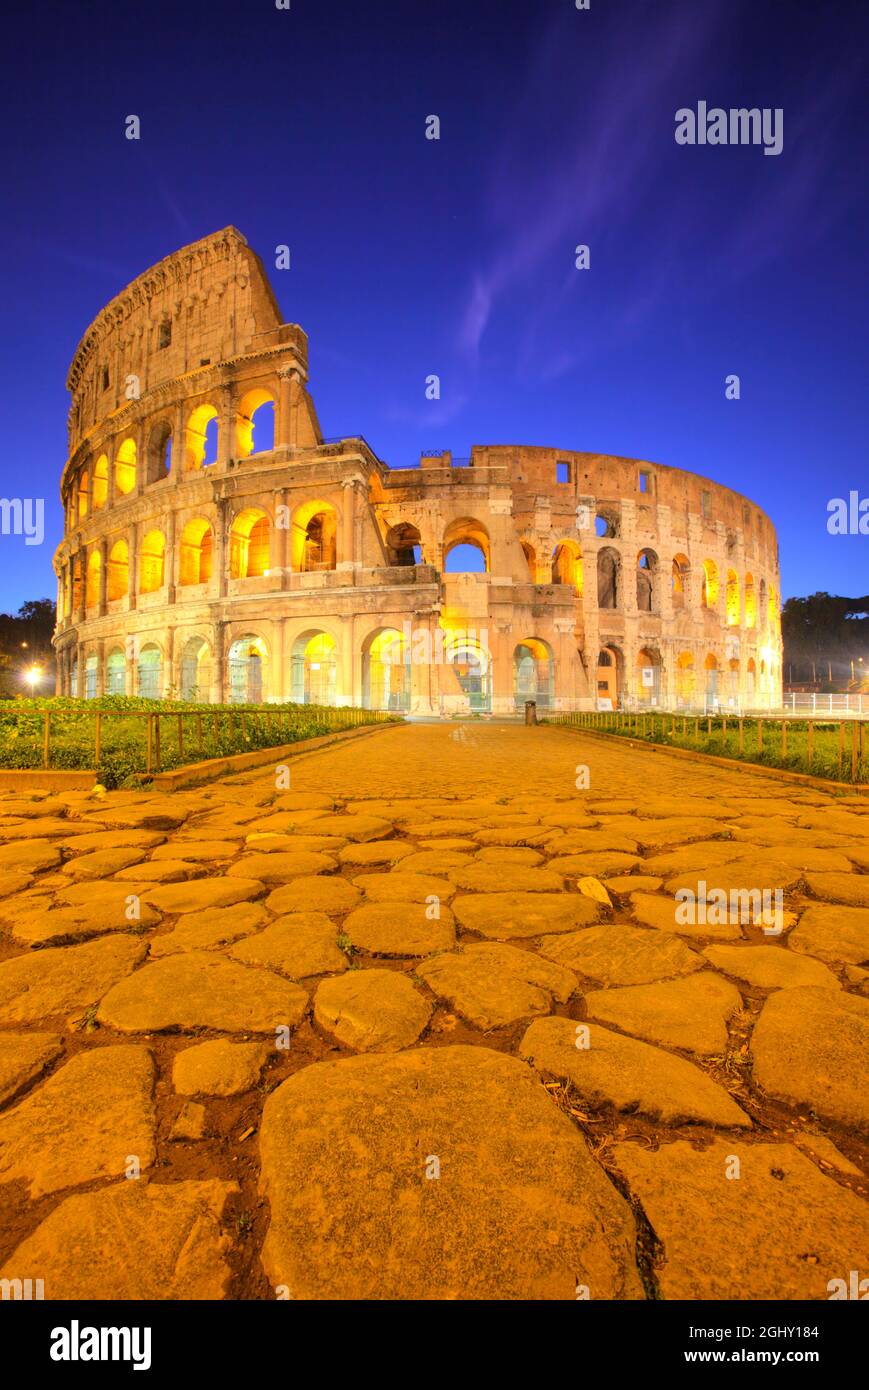 Colosseum at dusk, Rome, Italy Stock Photo